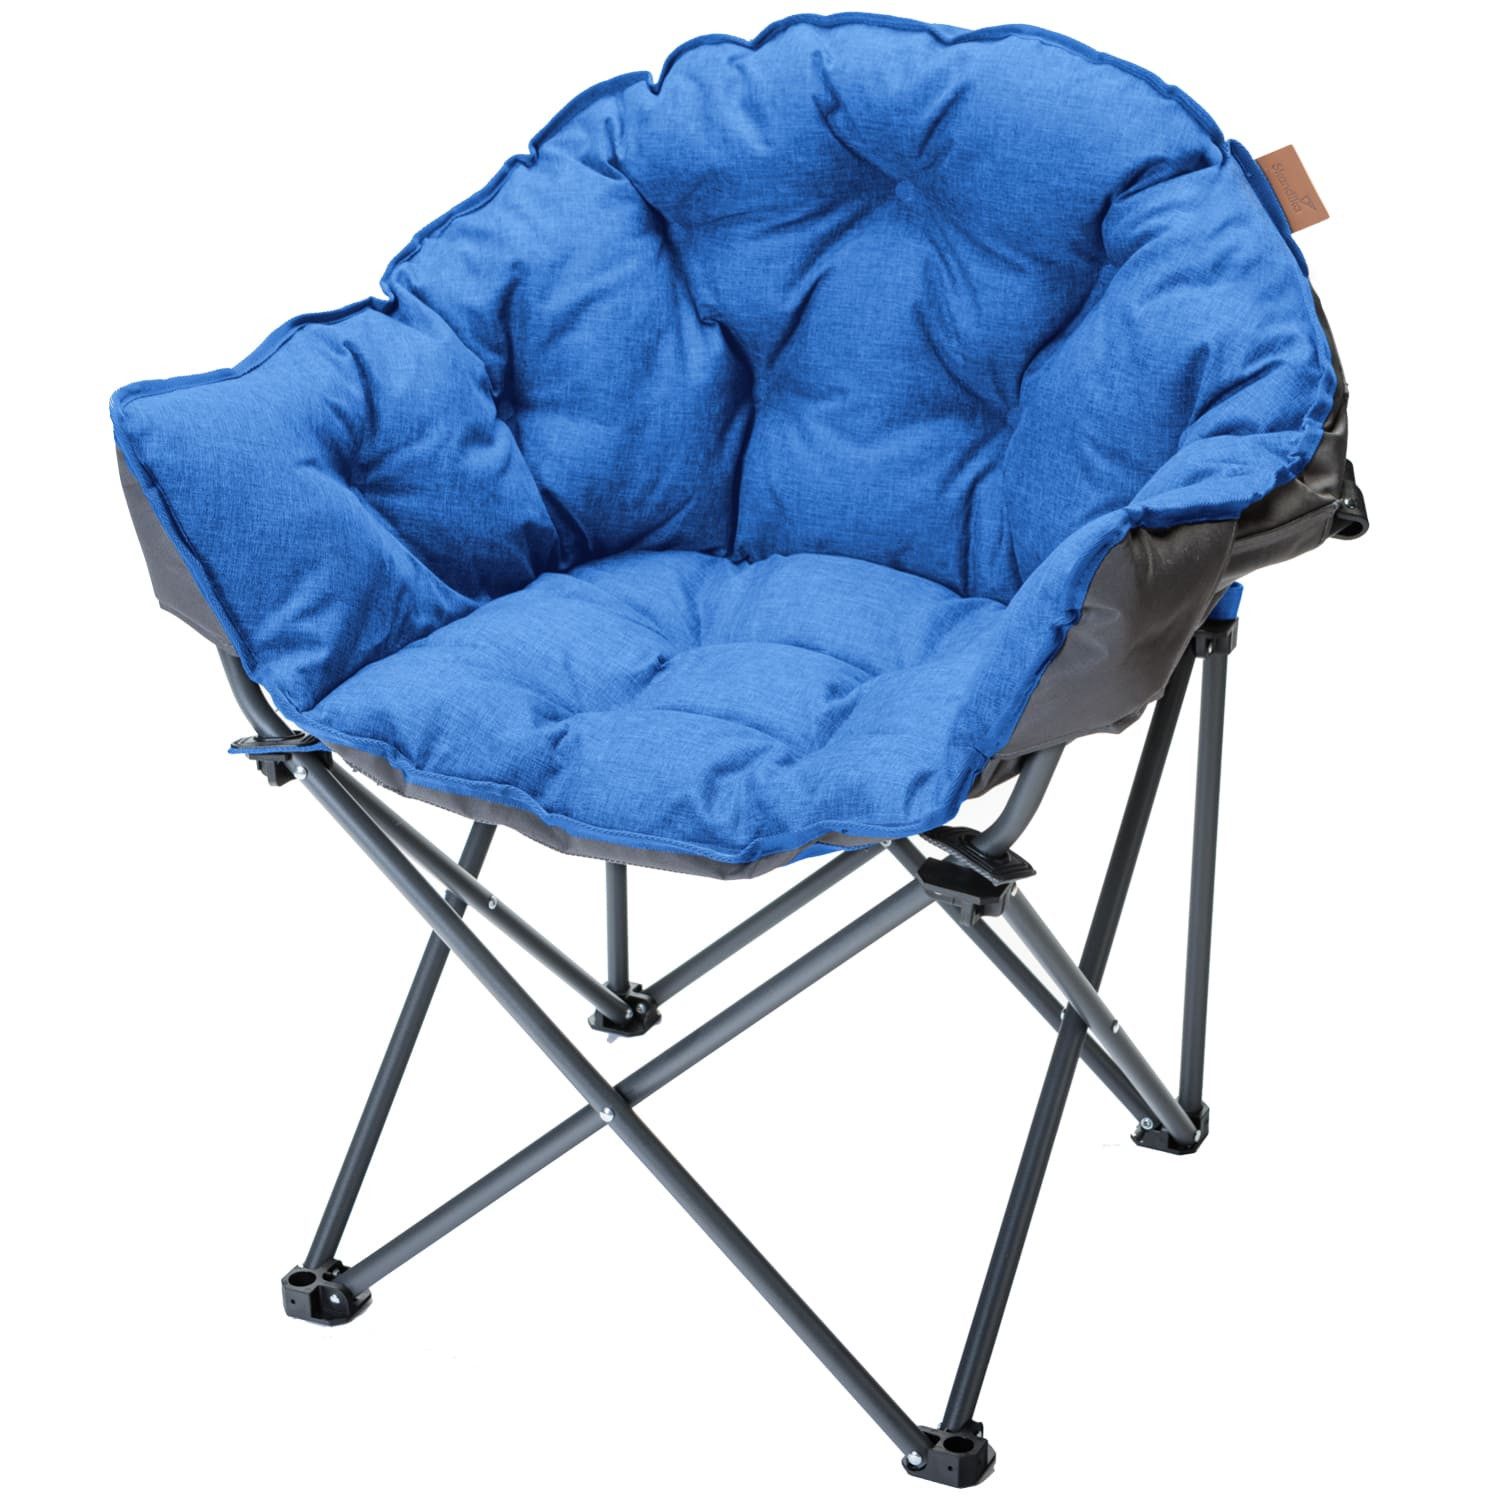 Skandika Campingstuhl SKANDIKA Moonchair Premium XL (blau), Bequemer Klappsessel mit Lehne, bis 150 kg